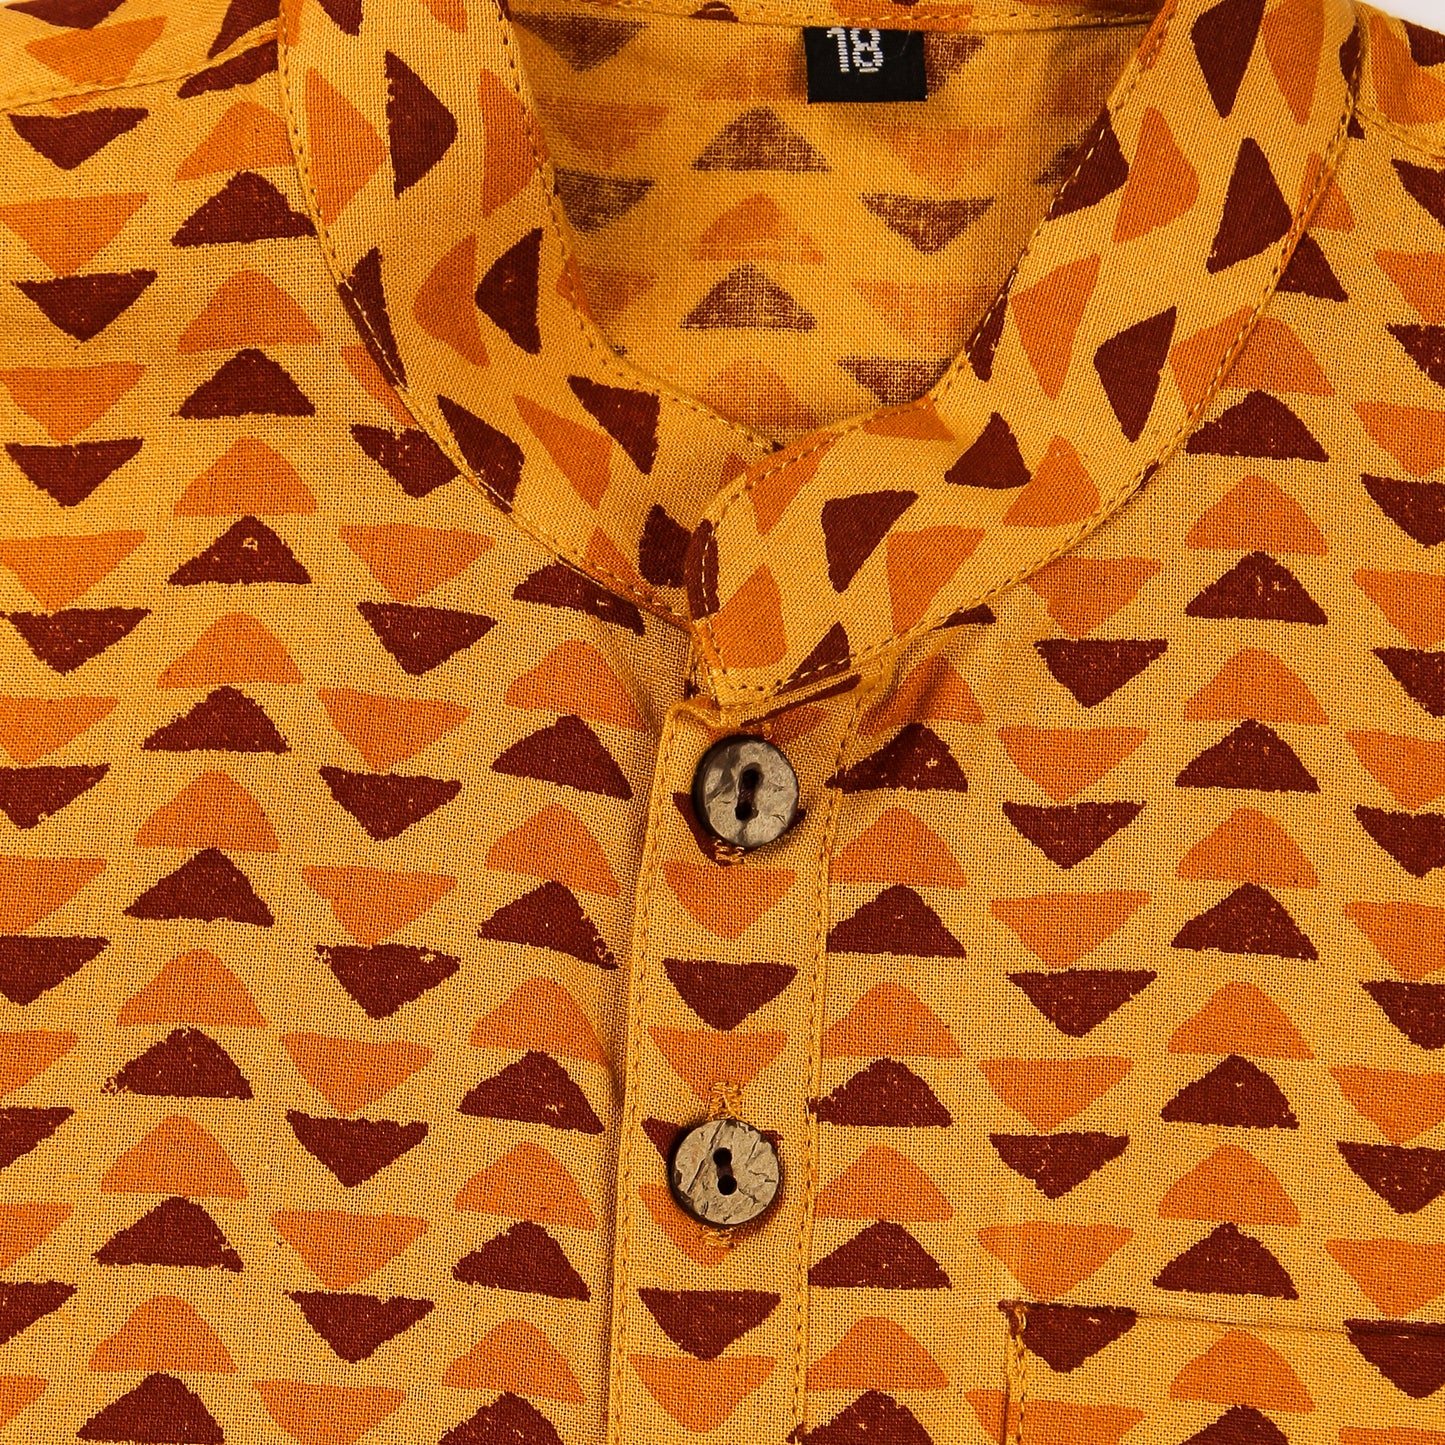 Mustard Kurta Pajama for Boys, Ages 0-16 Years, Cotton, Geometric Print